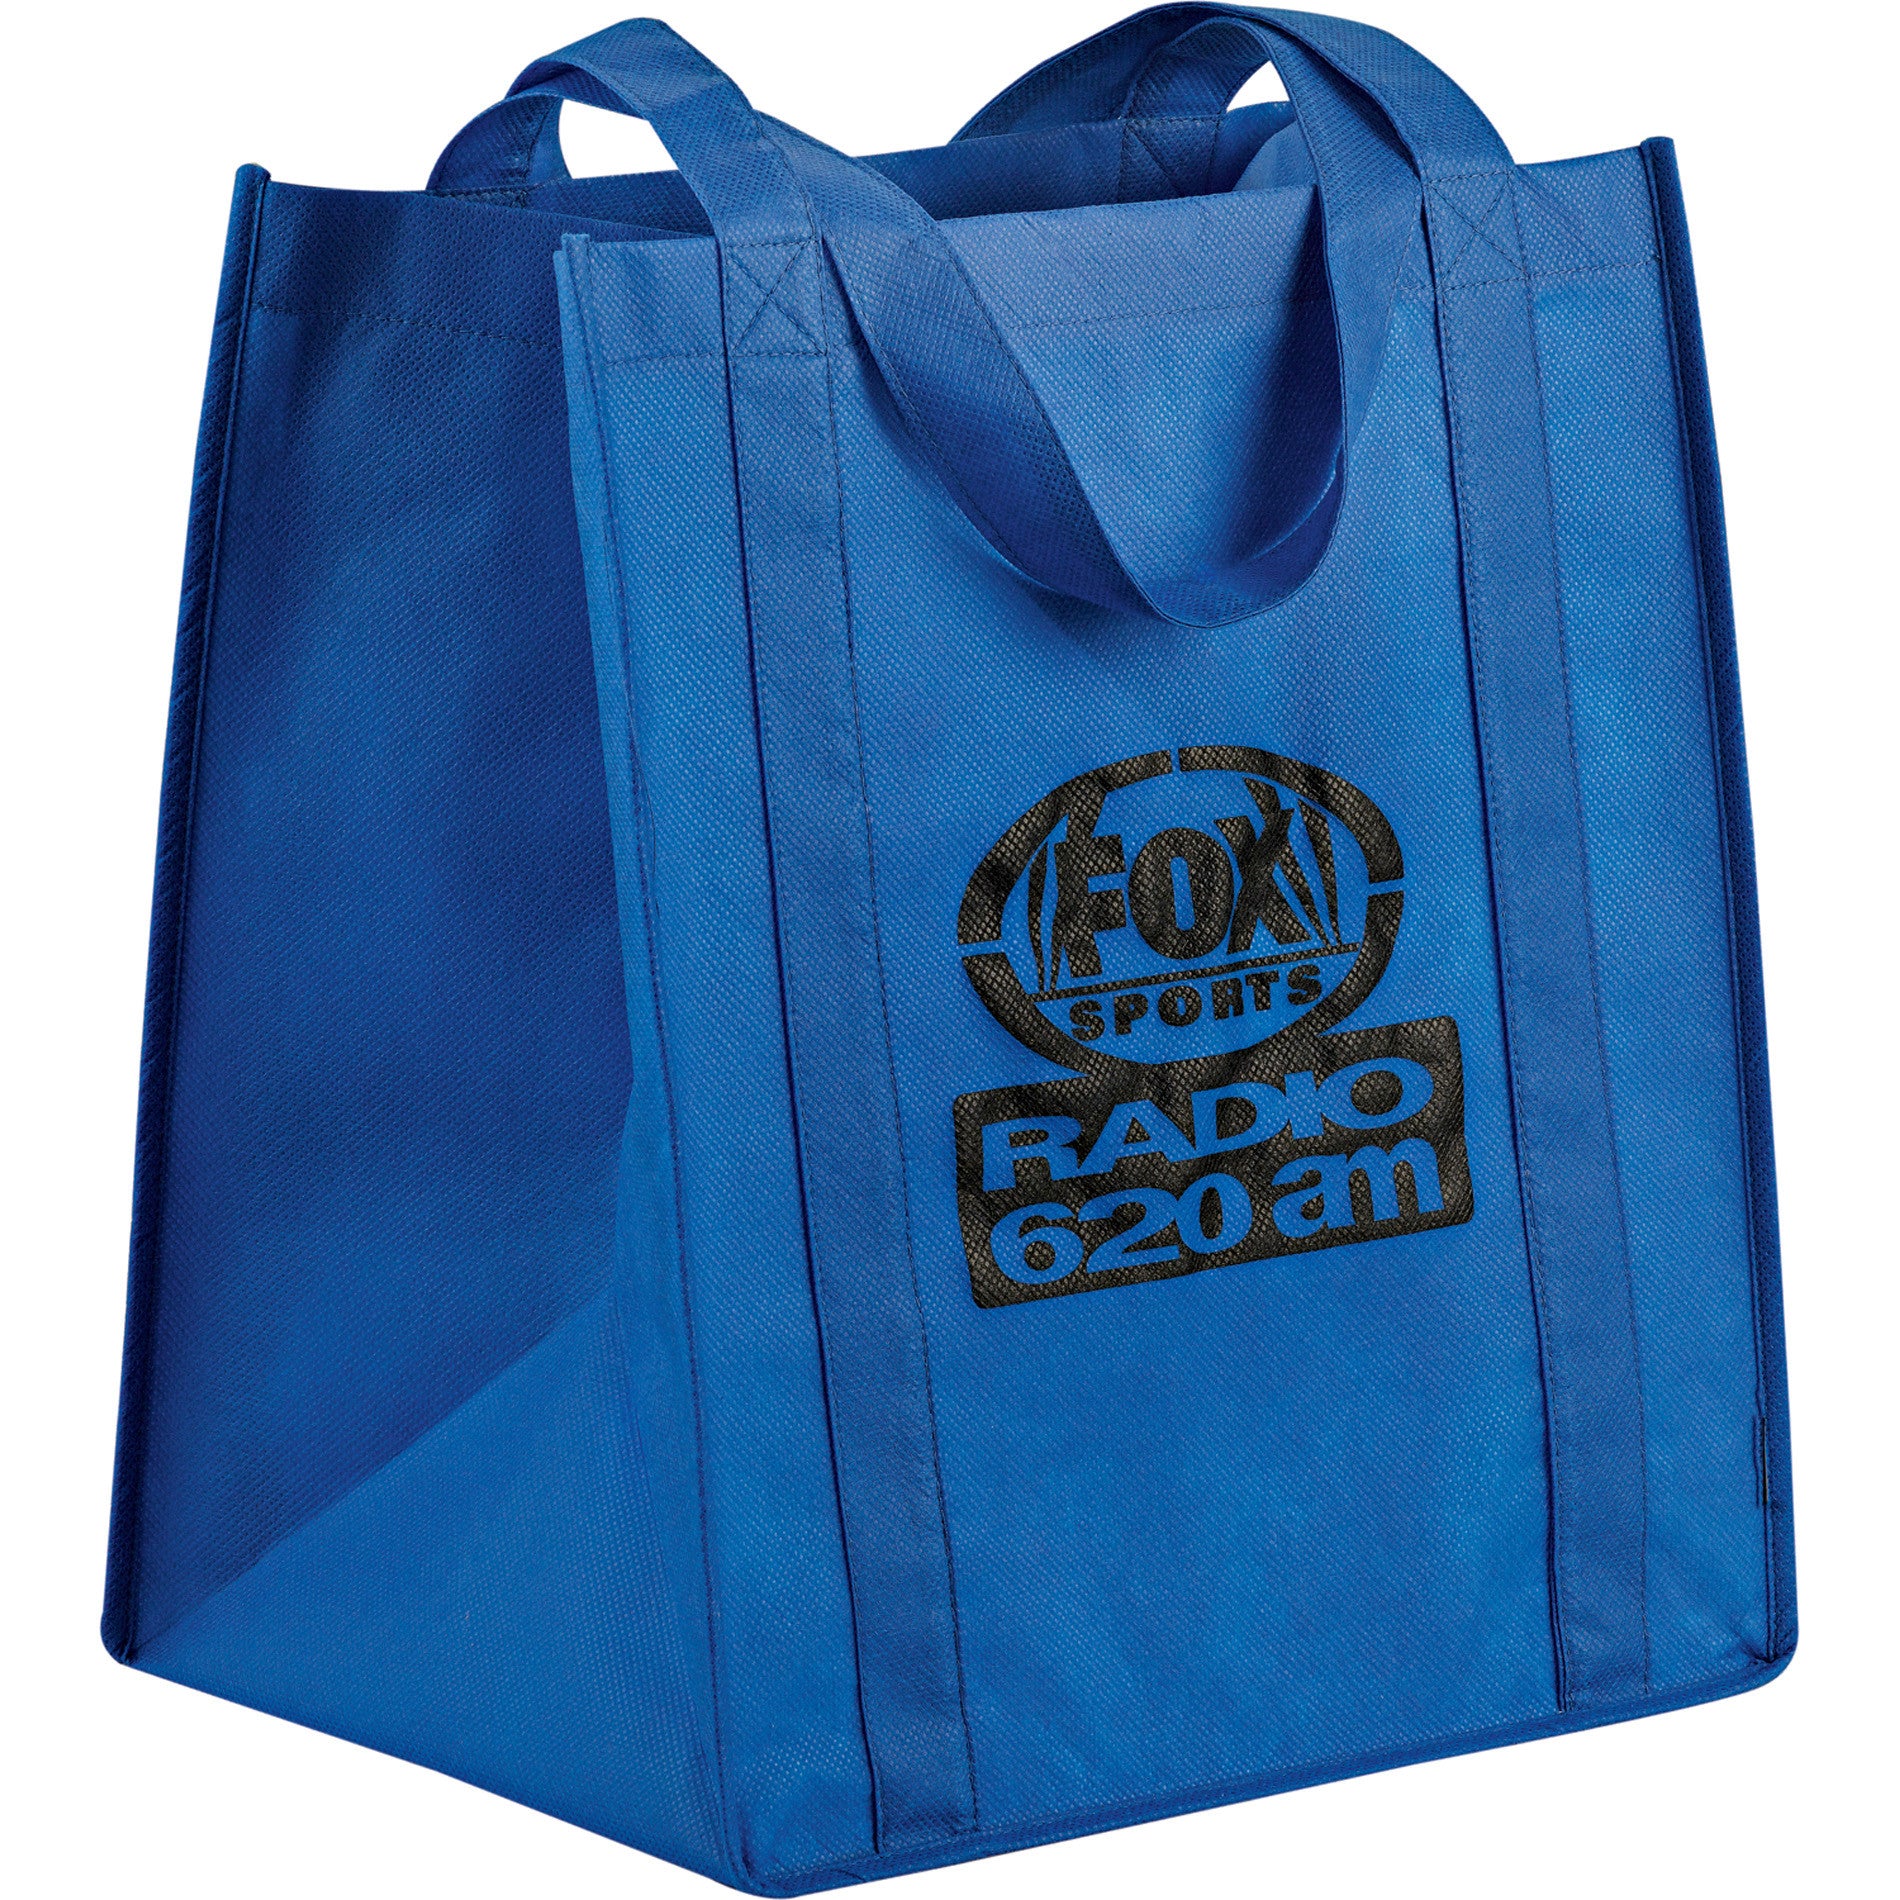 Environmentally Friendly Shopping Bags